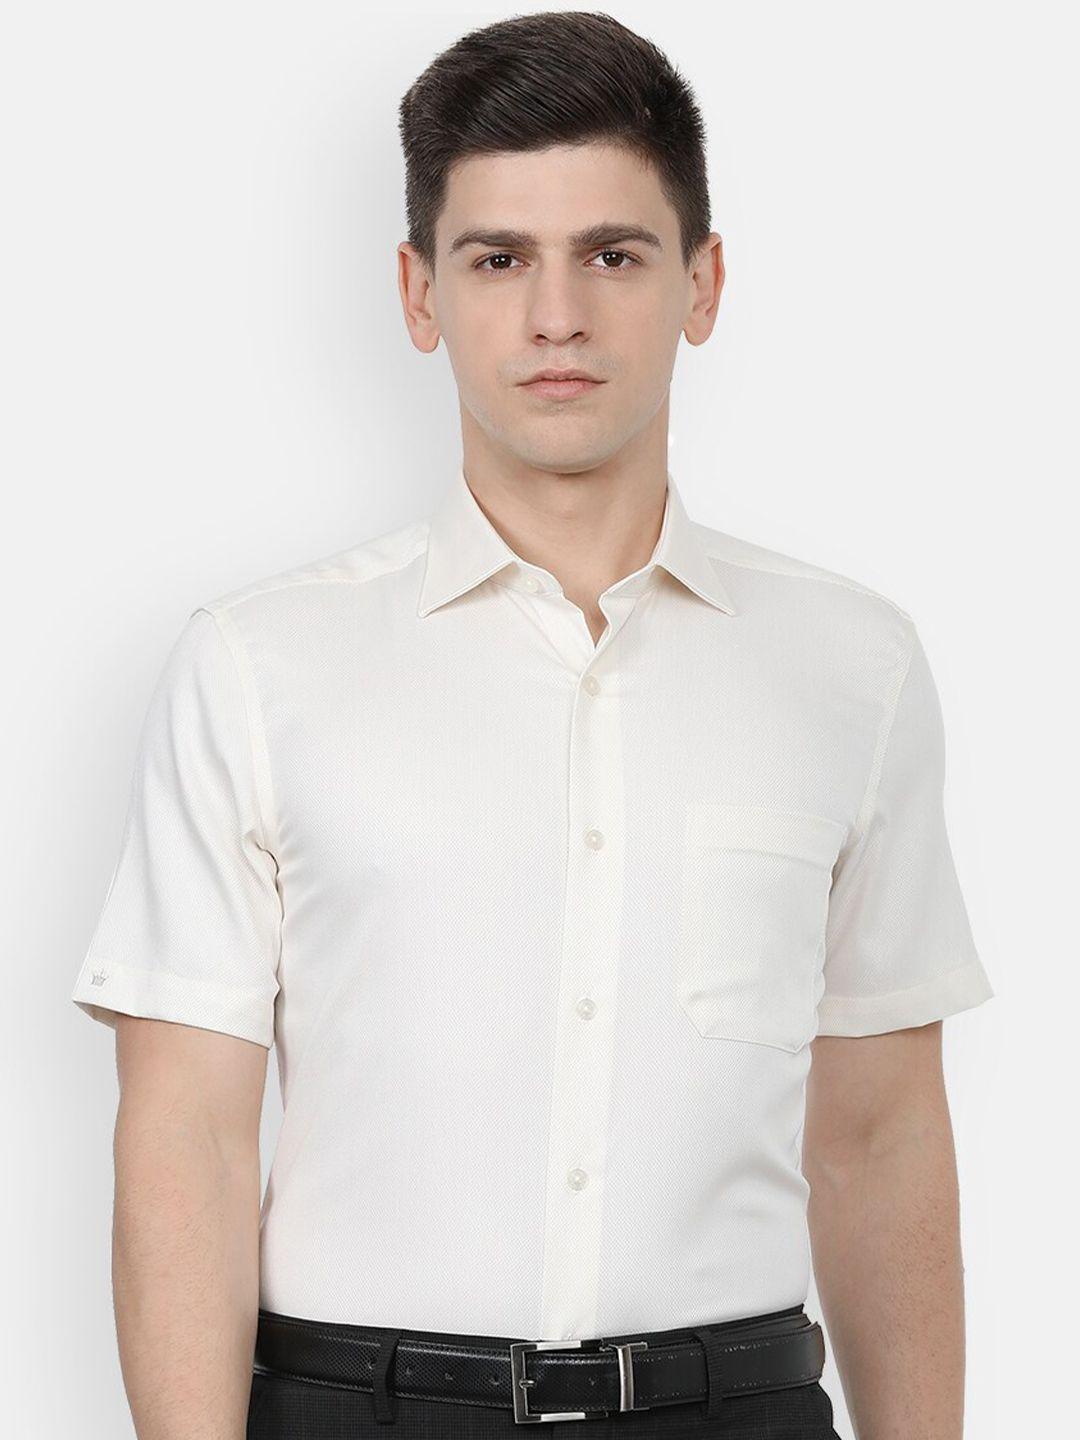 louis-philippe-permapress-men-cream-coloured-cotton-formal-shirt